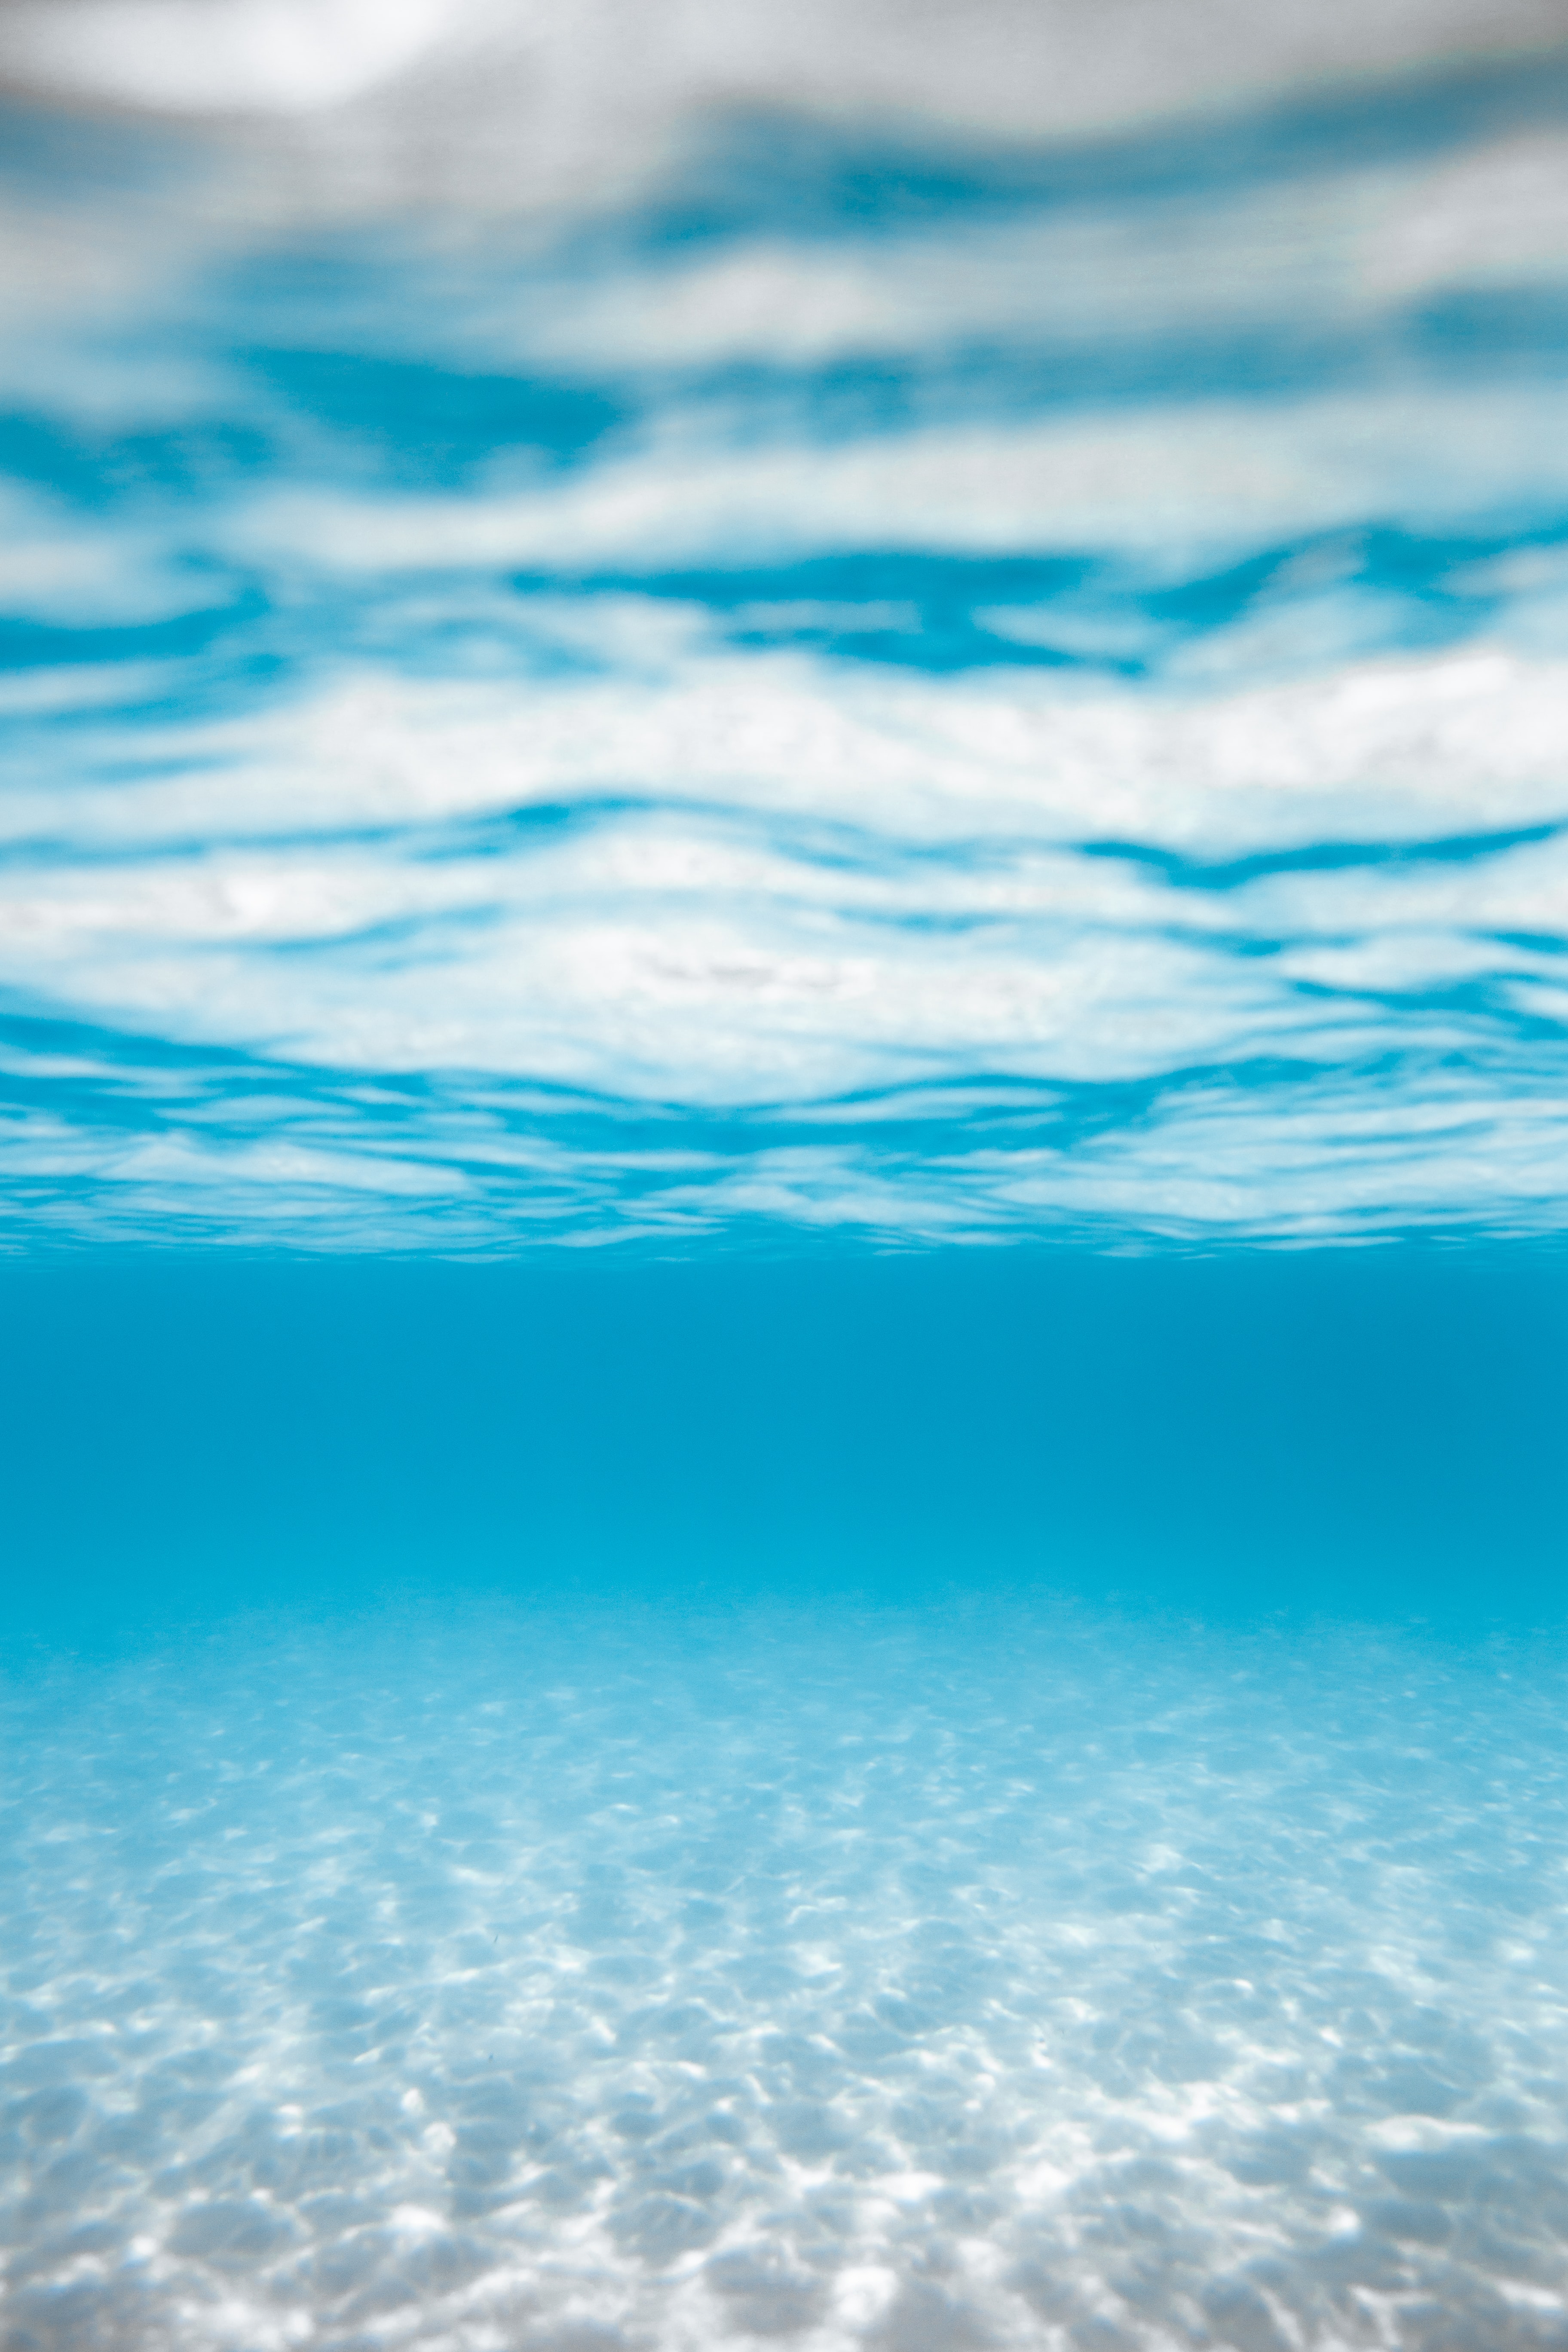 151555 descargar imagen azul, bajo el agua, naturaleza, agua, transparente, submarino: fondos de pantalla y protectores de pantalla gratis